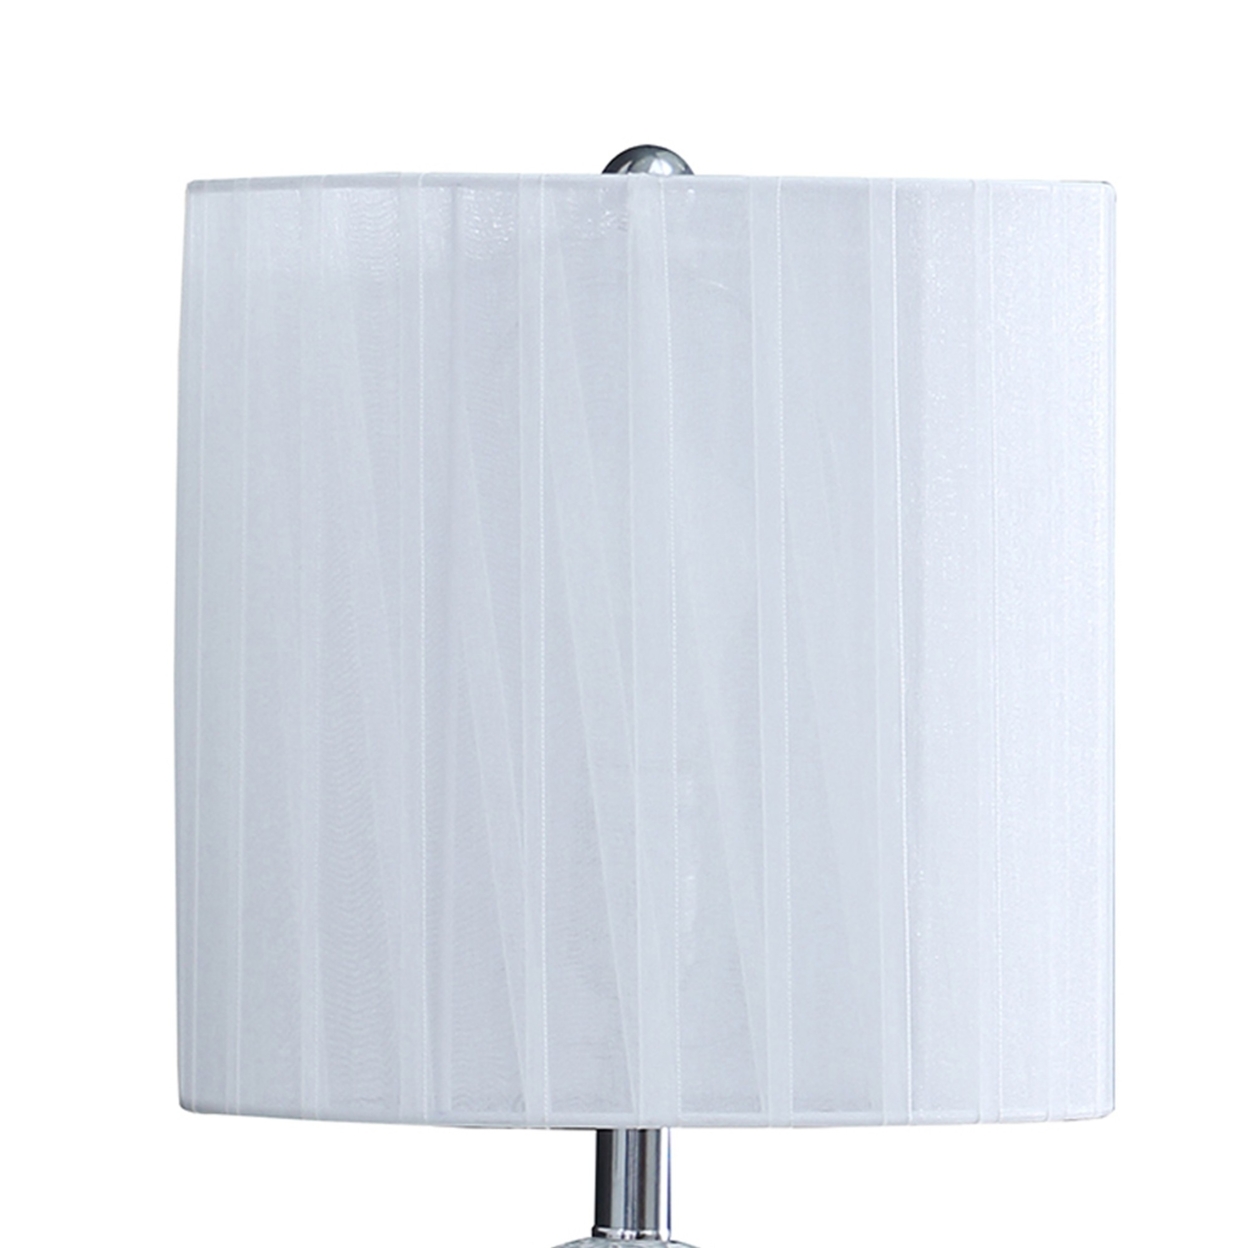 20 Inch Glass Table Lamp, 9W LED, 3 Way Switch, Egg Shape, Silver- Saltoro Sherpi